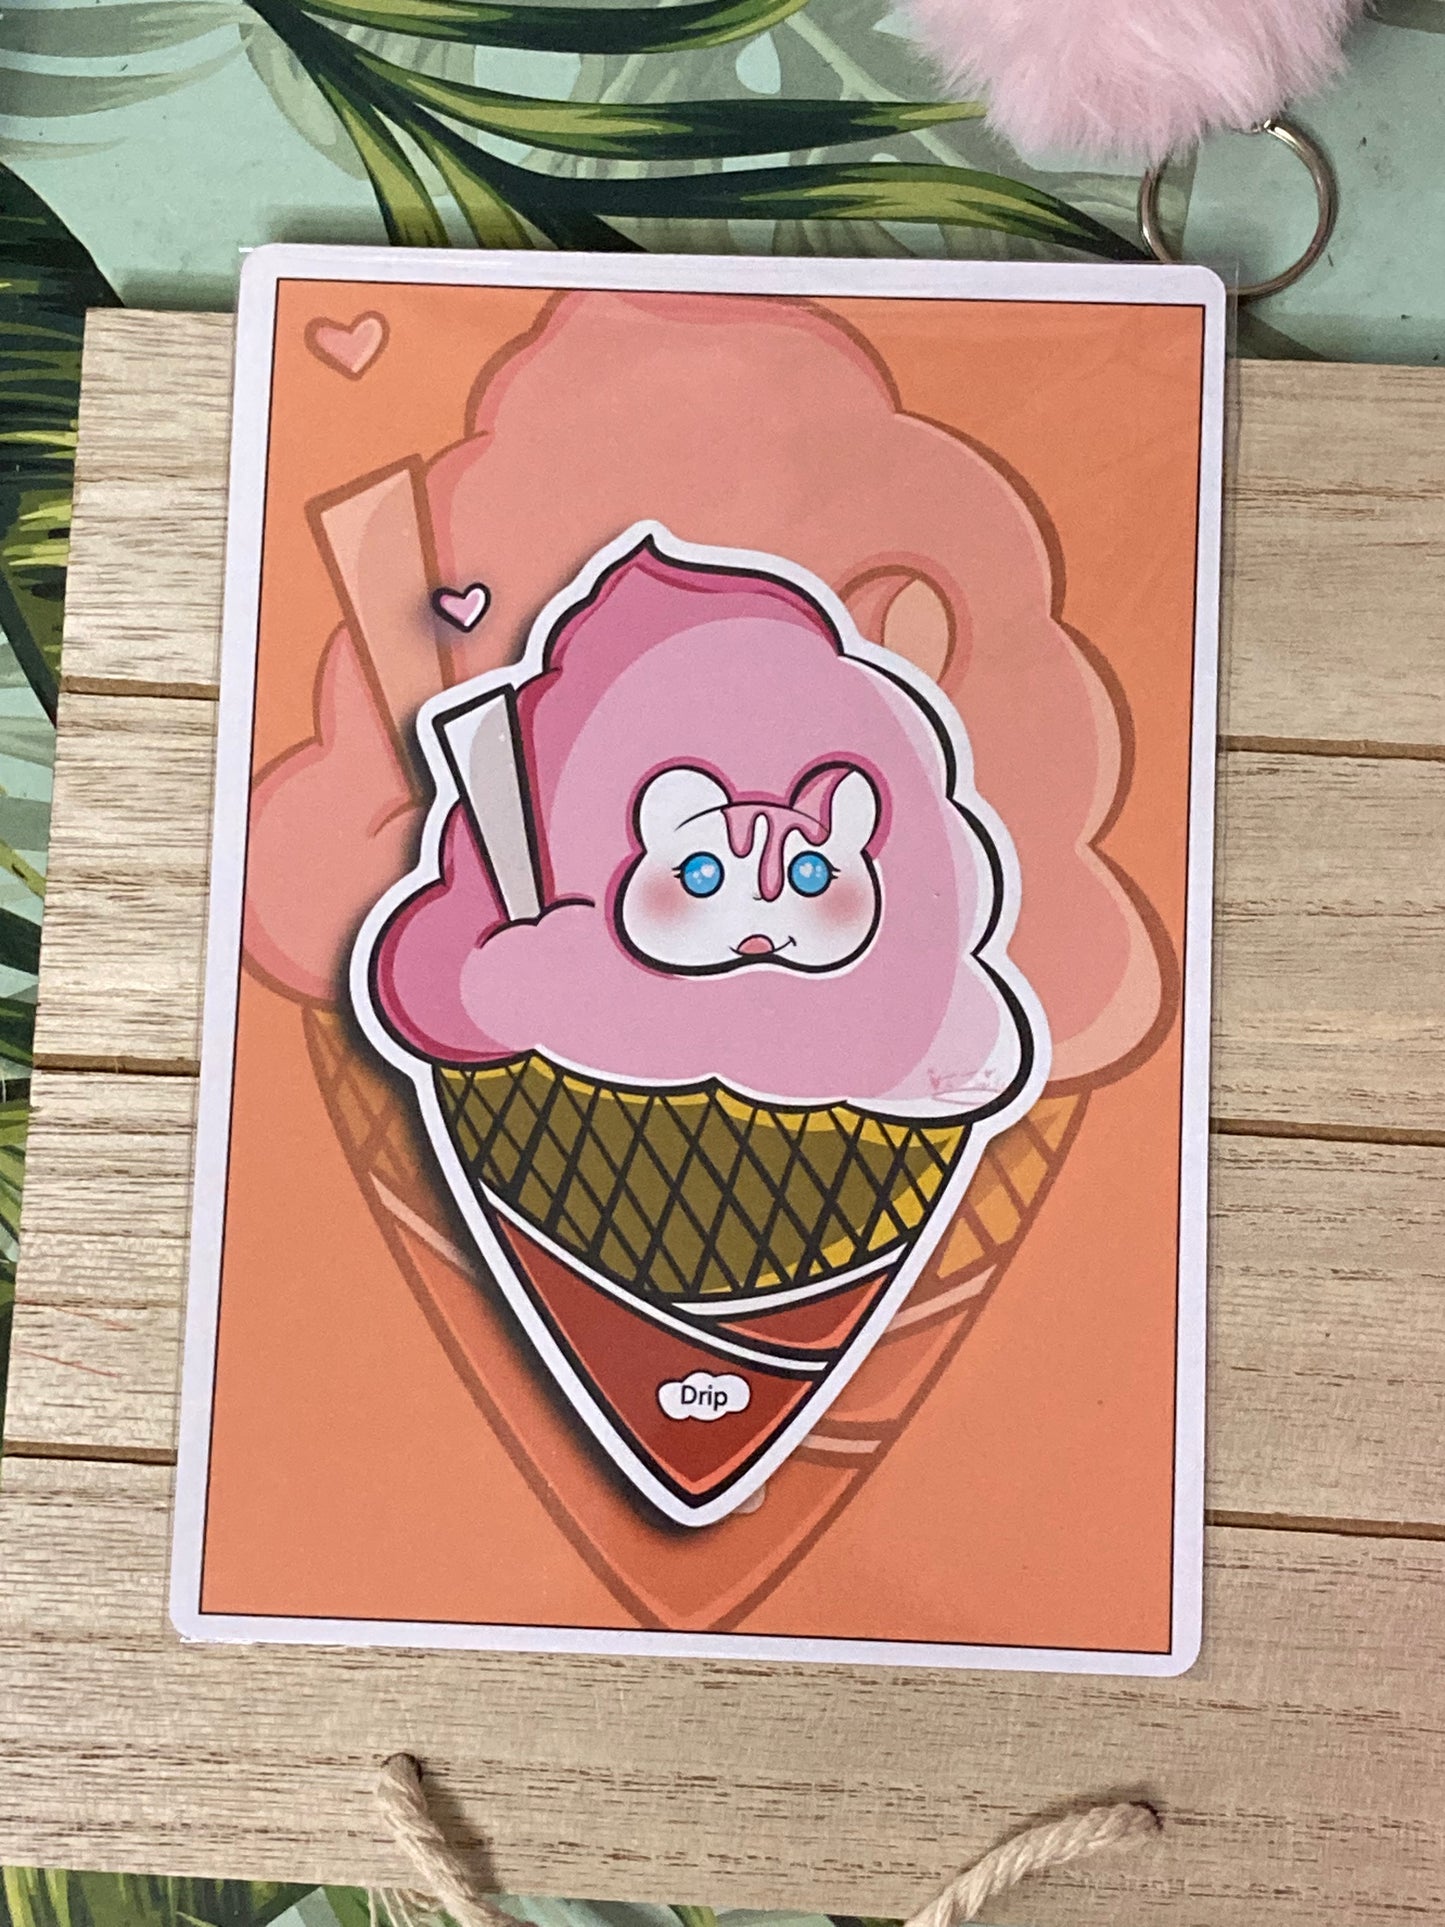 Drip Ice Cream Cone Print